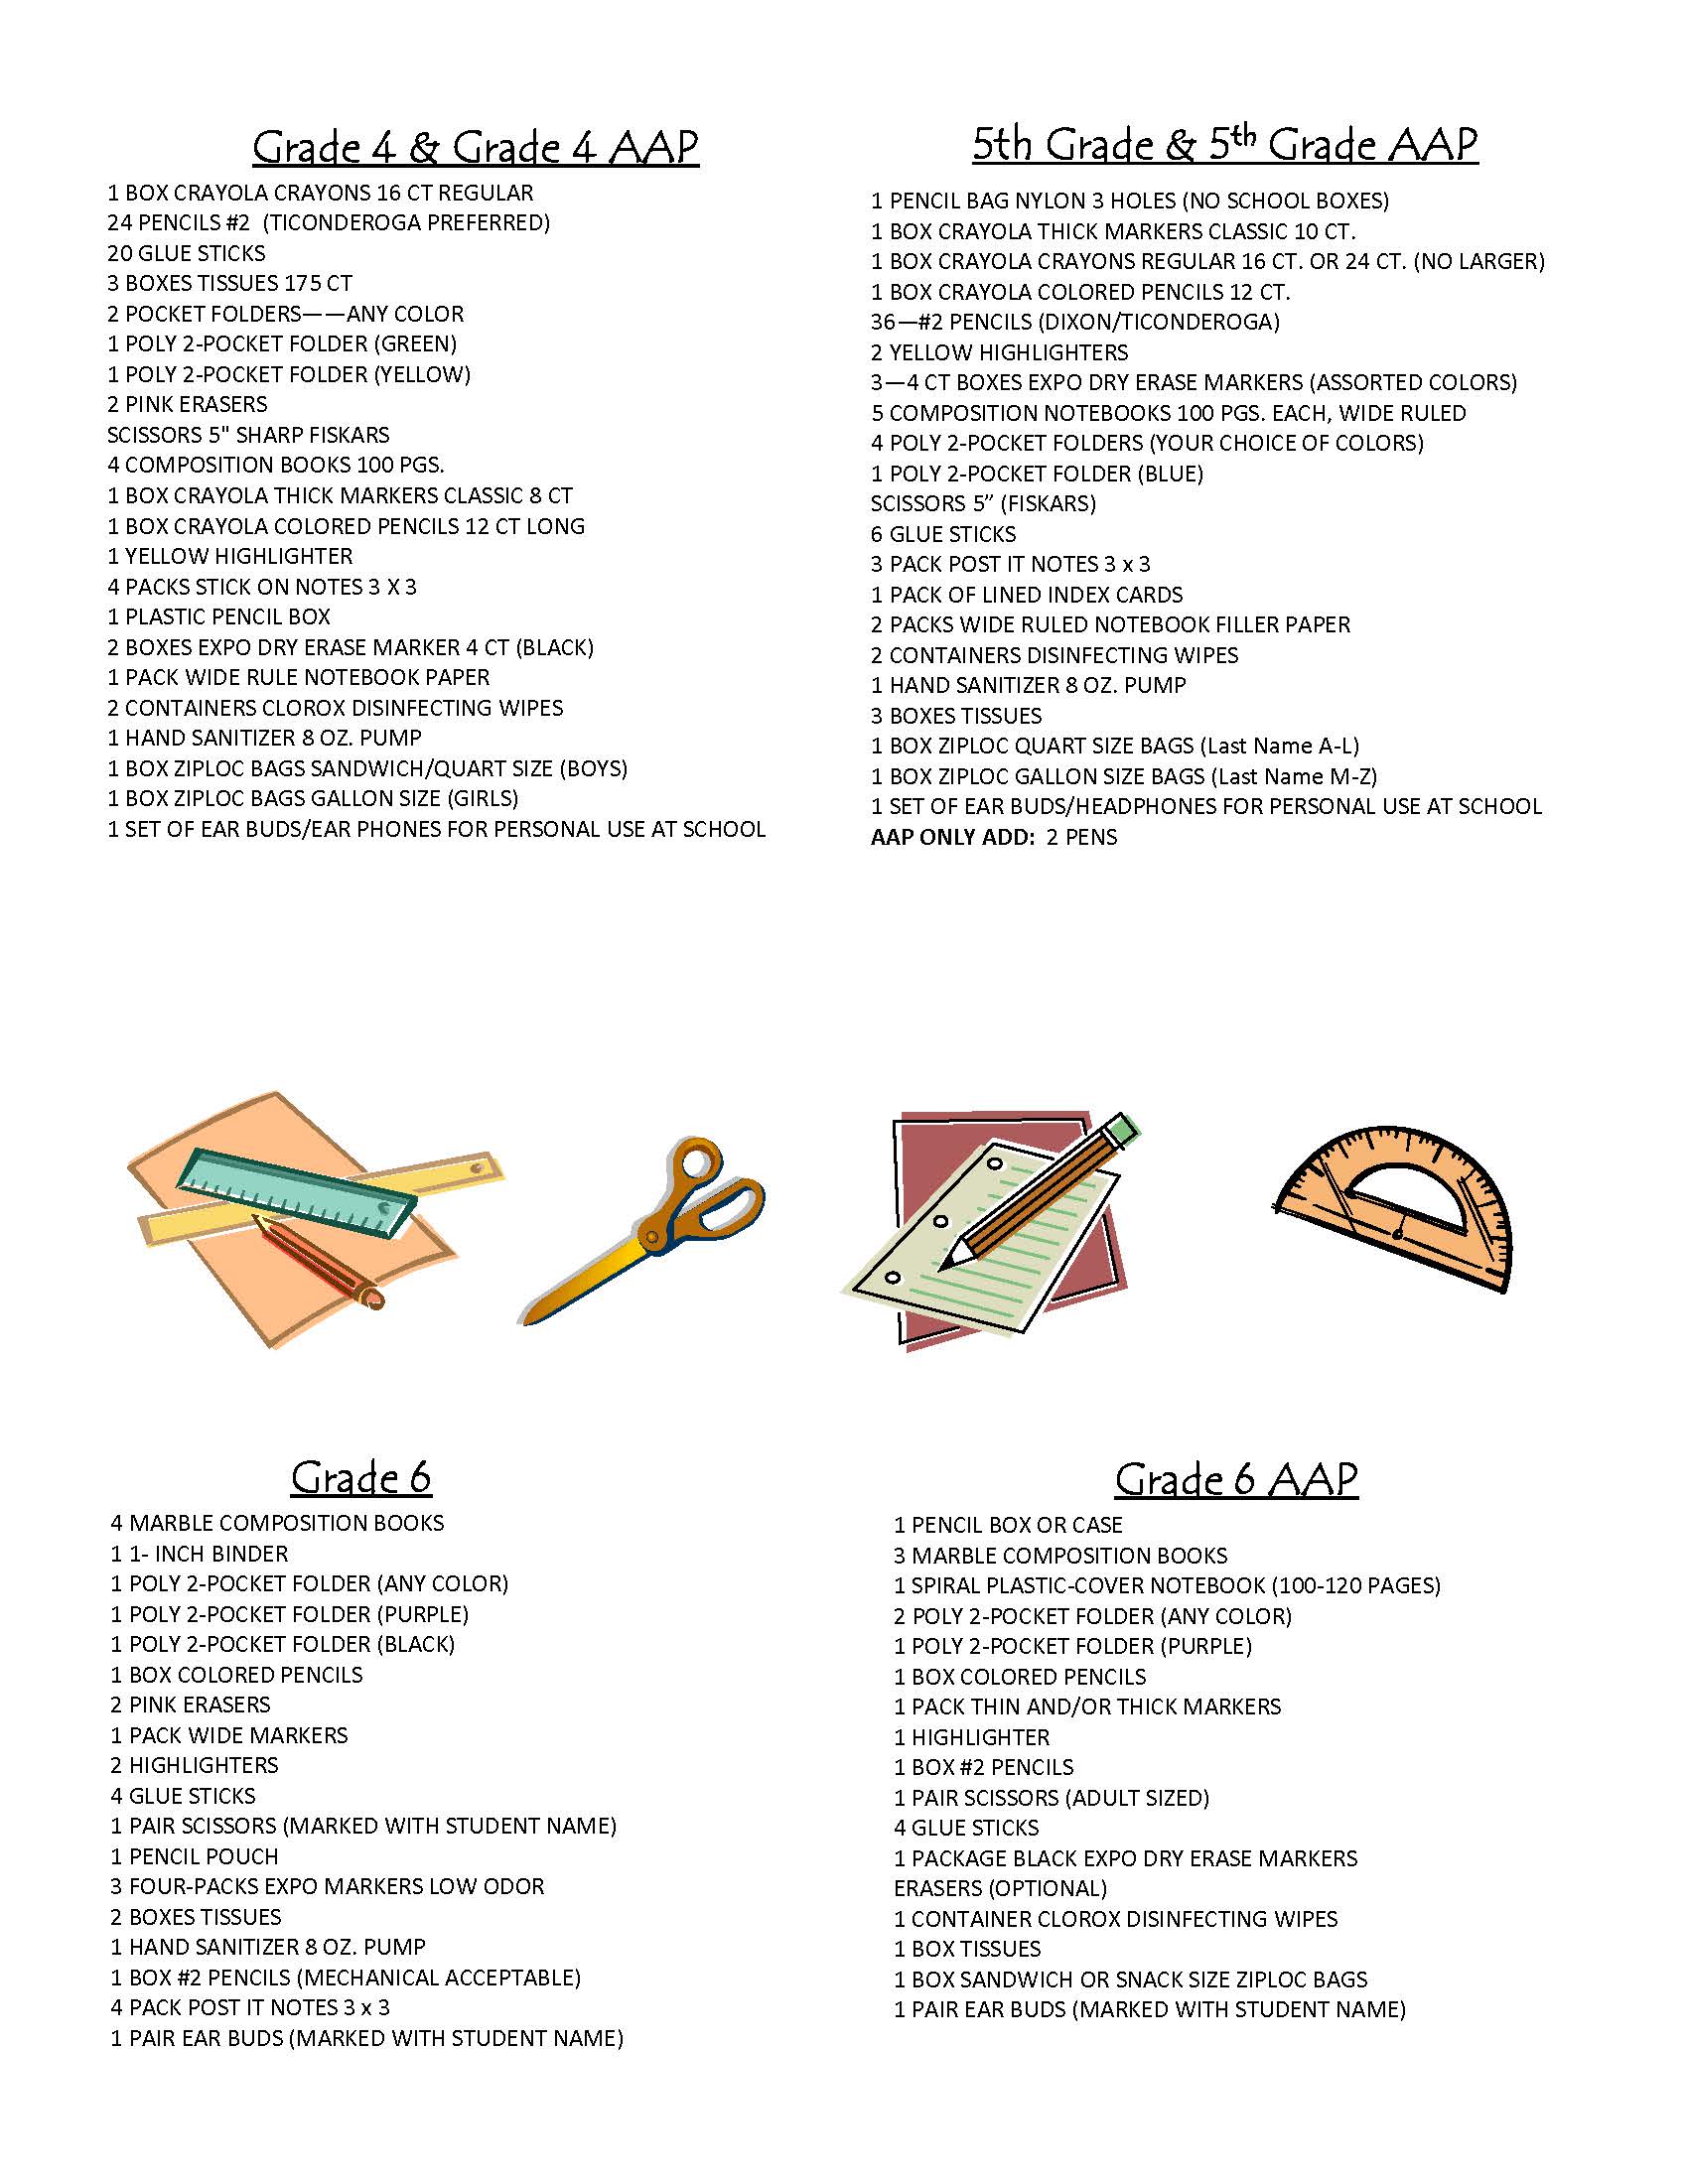 Supplies List Page 2